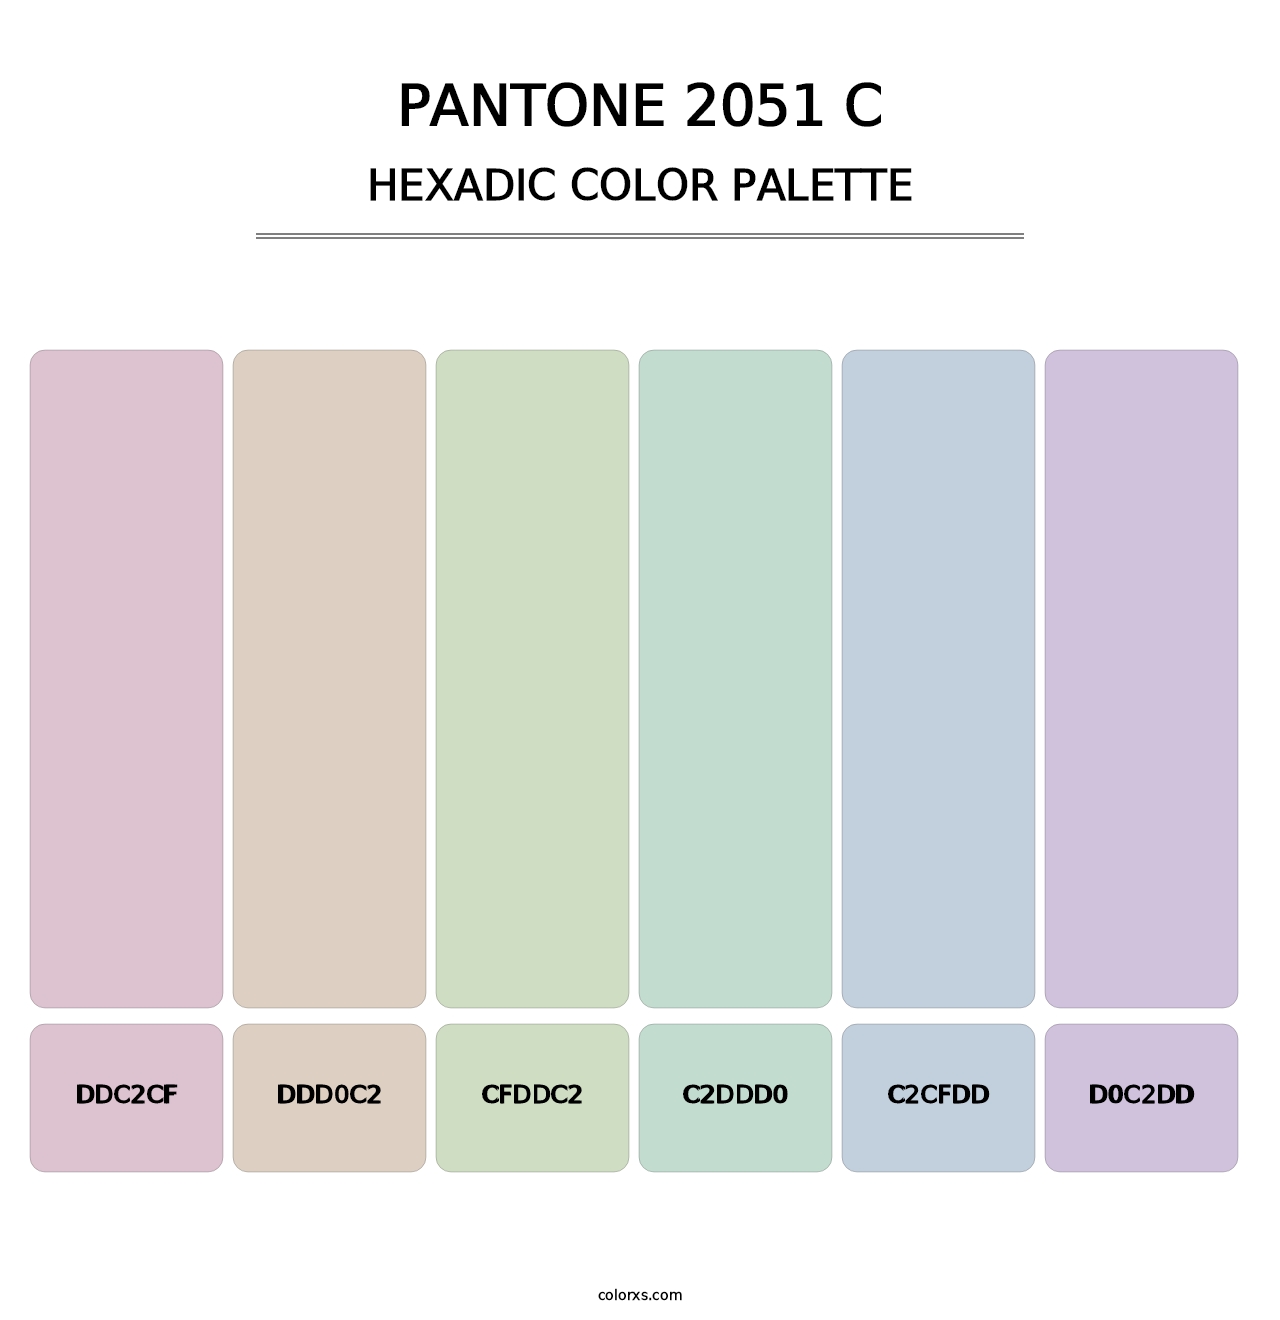 PANTONE 2051 C - Hexadic Color Palette